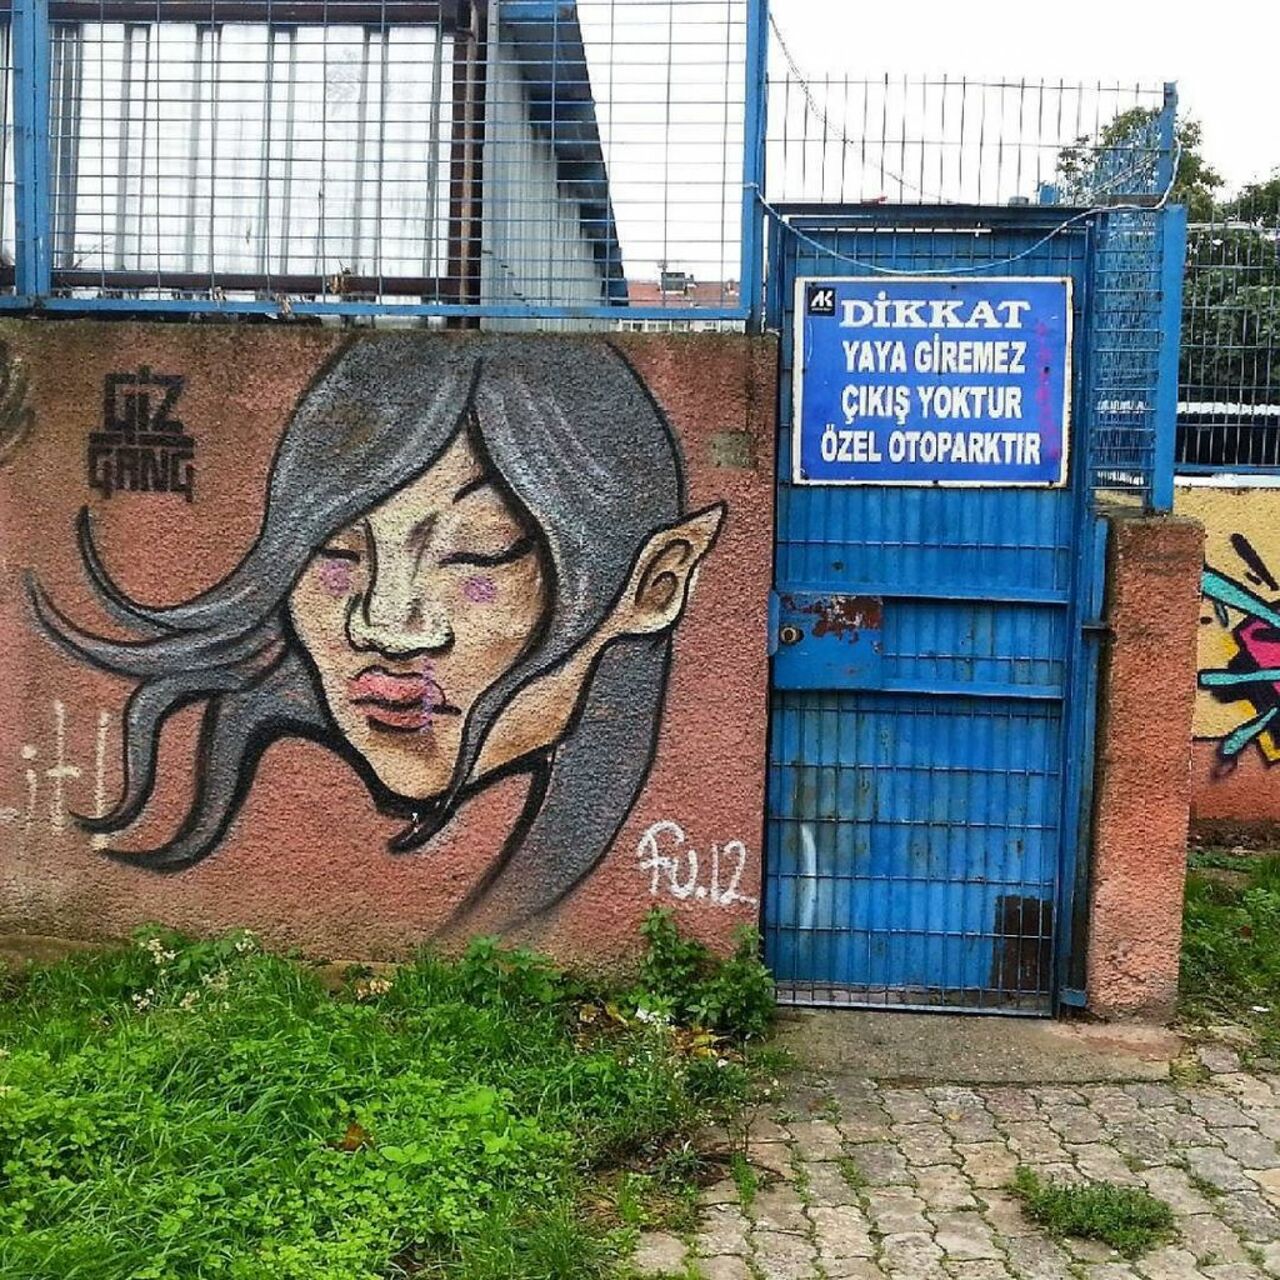 #streetartkadikoy #streetart #graffiti #publicart #urbanart #sokaksanatı #streetartistanbul #istanbulstreetart #gra… https://t.co/UH6lKlwUoH